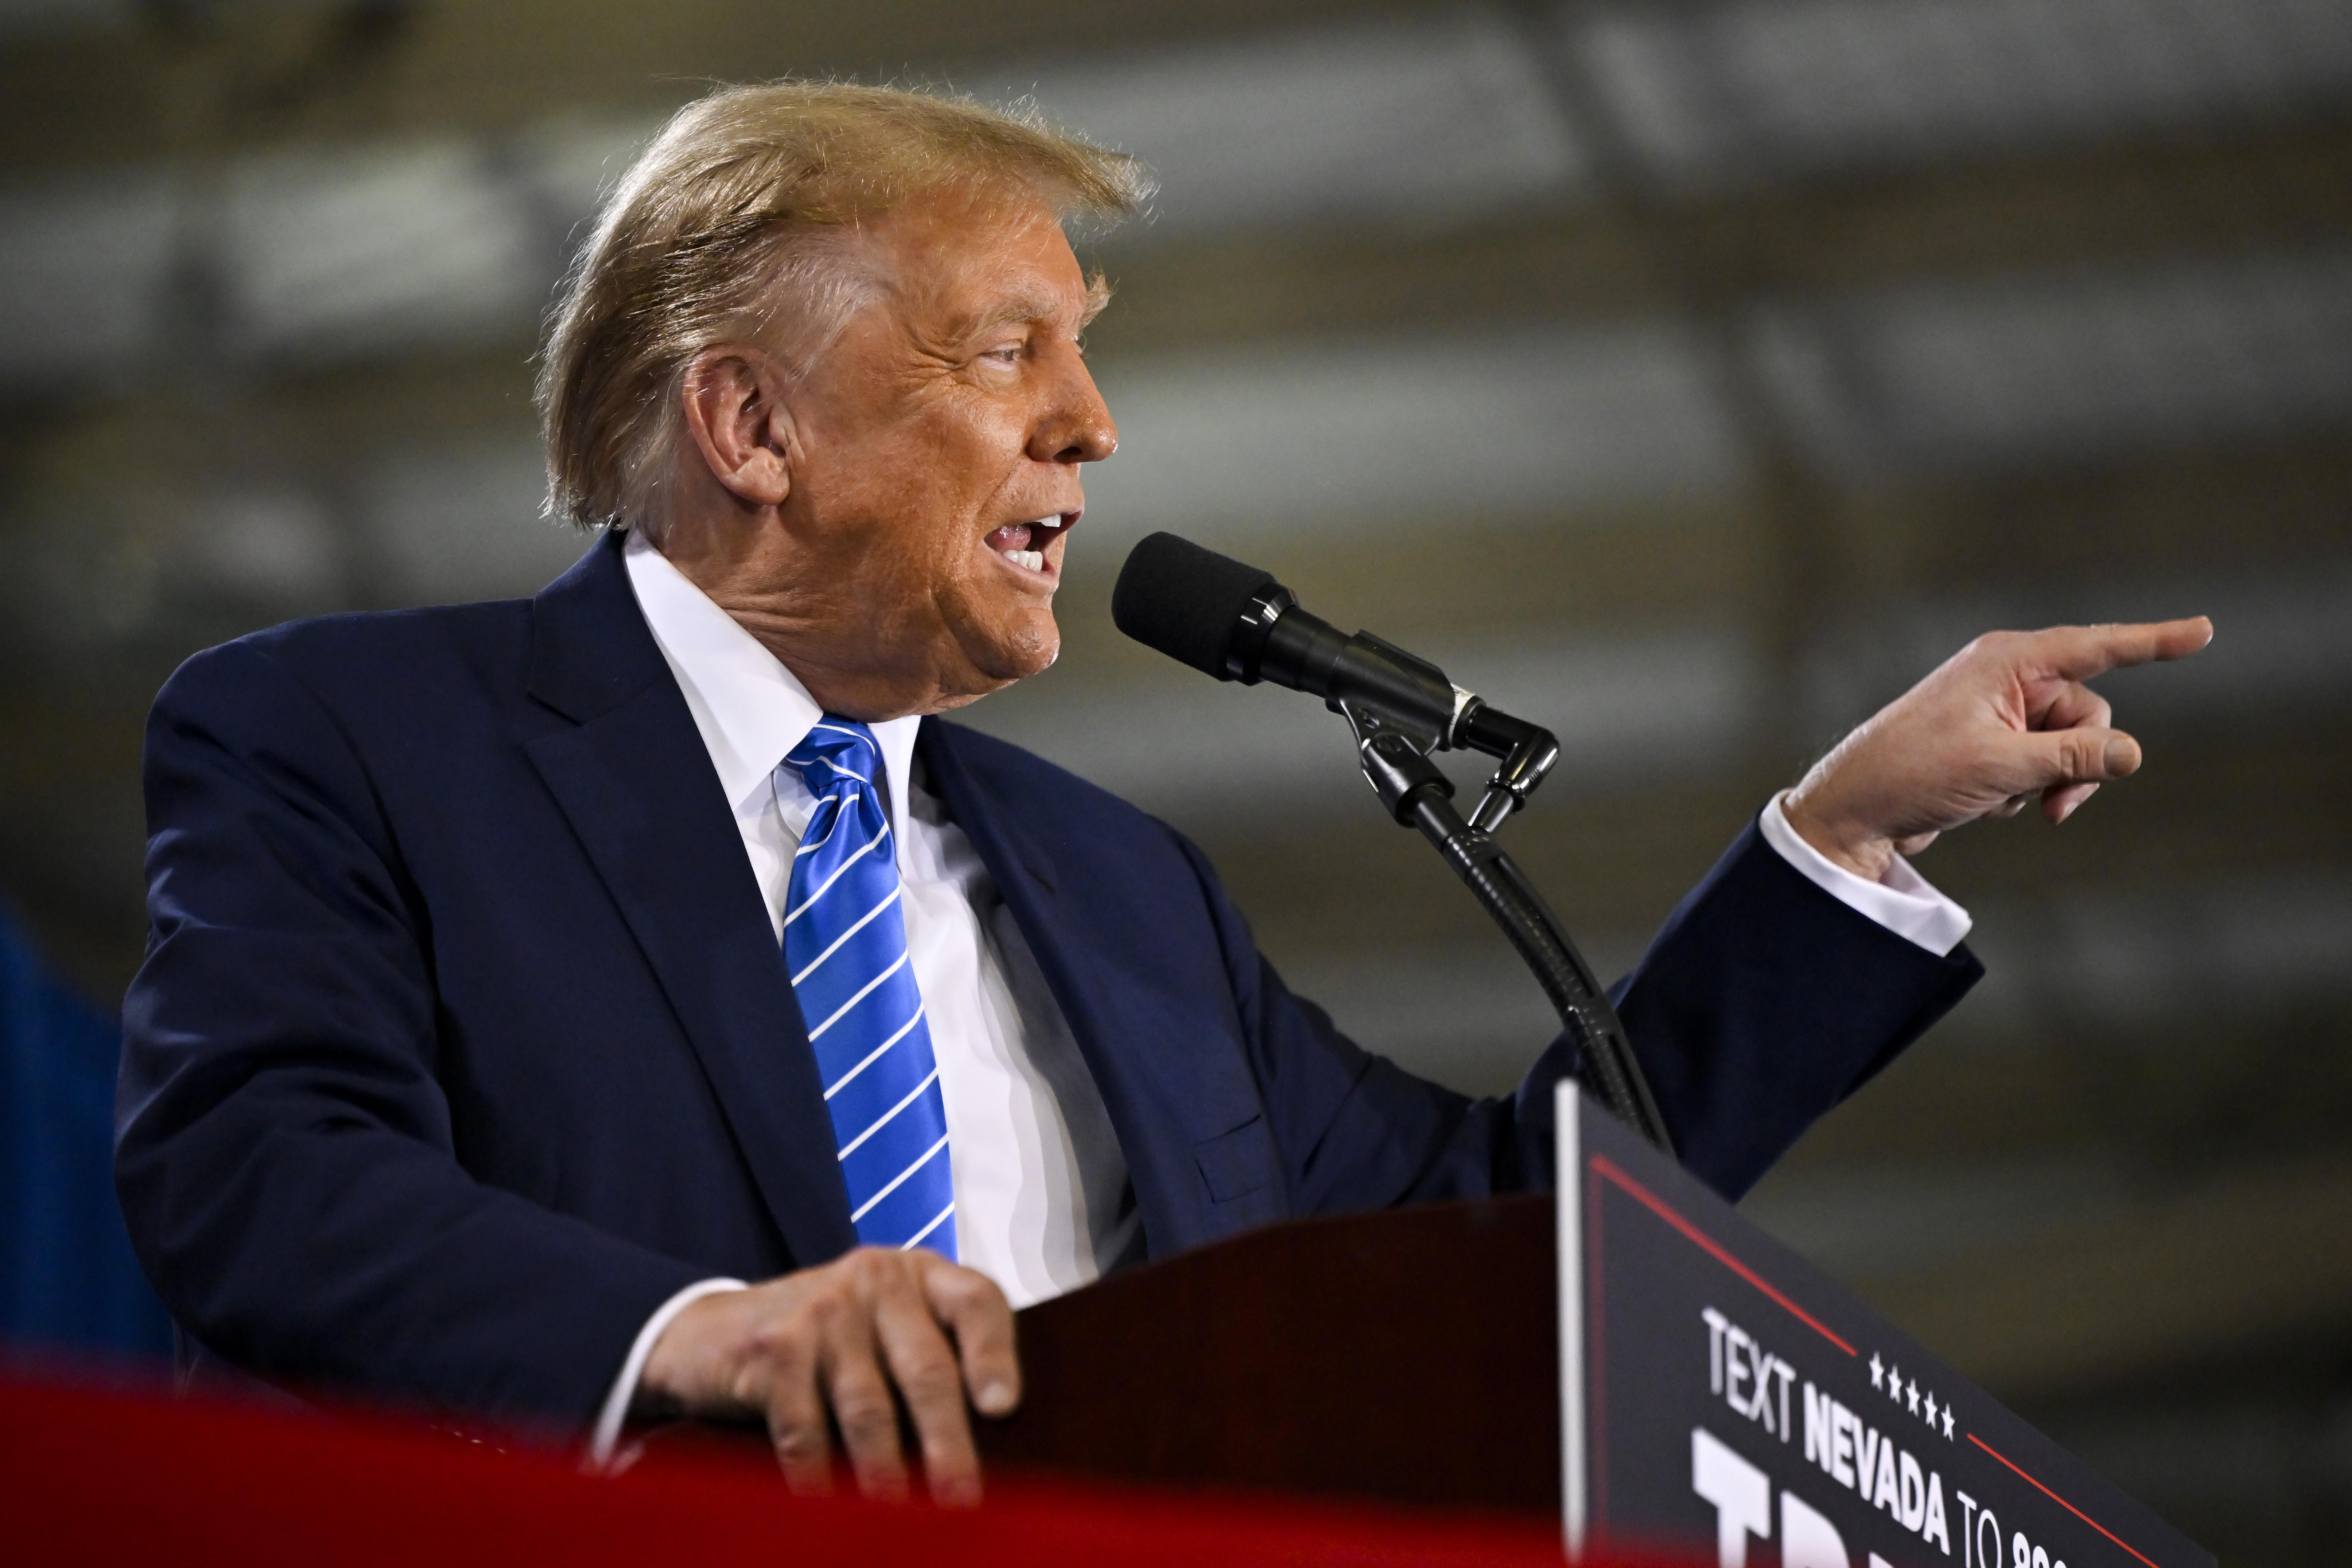 Trump gestures as he speaks into a microphone.